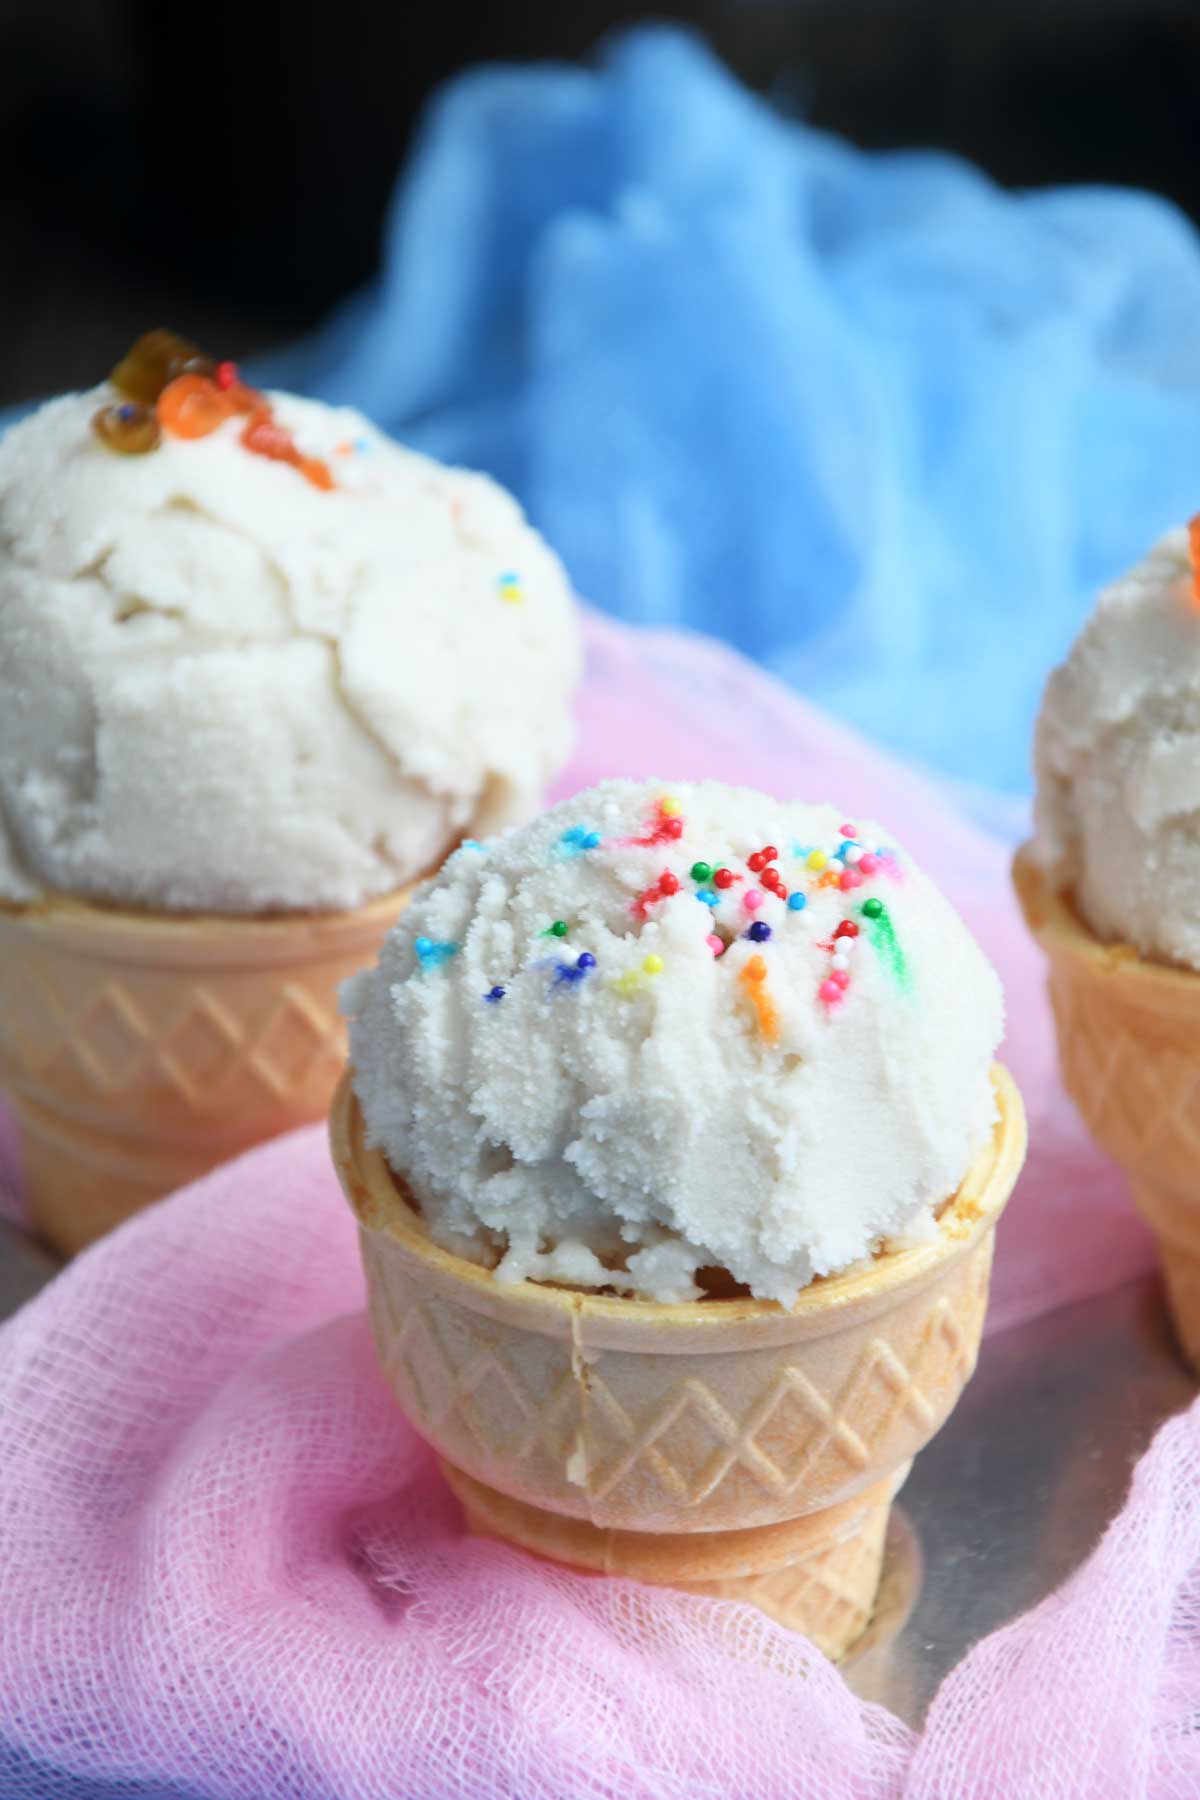 Vegan vanilla ice cream scoops served in cones.